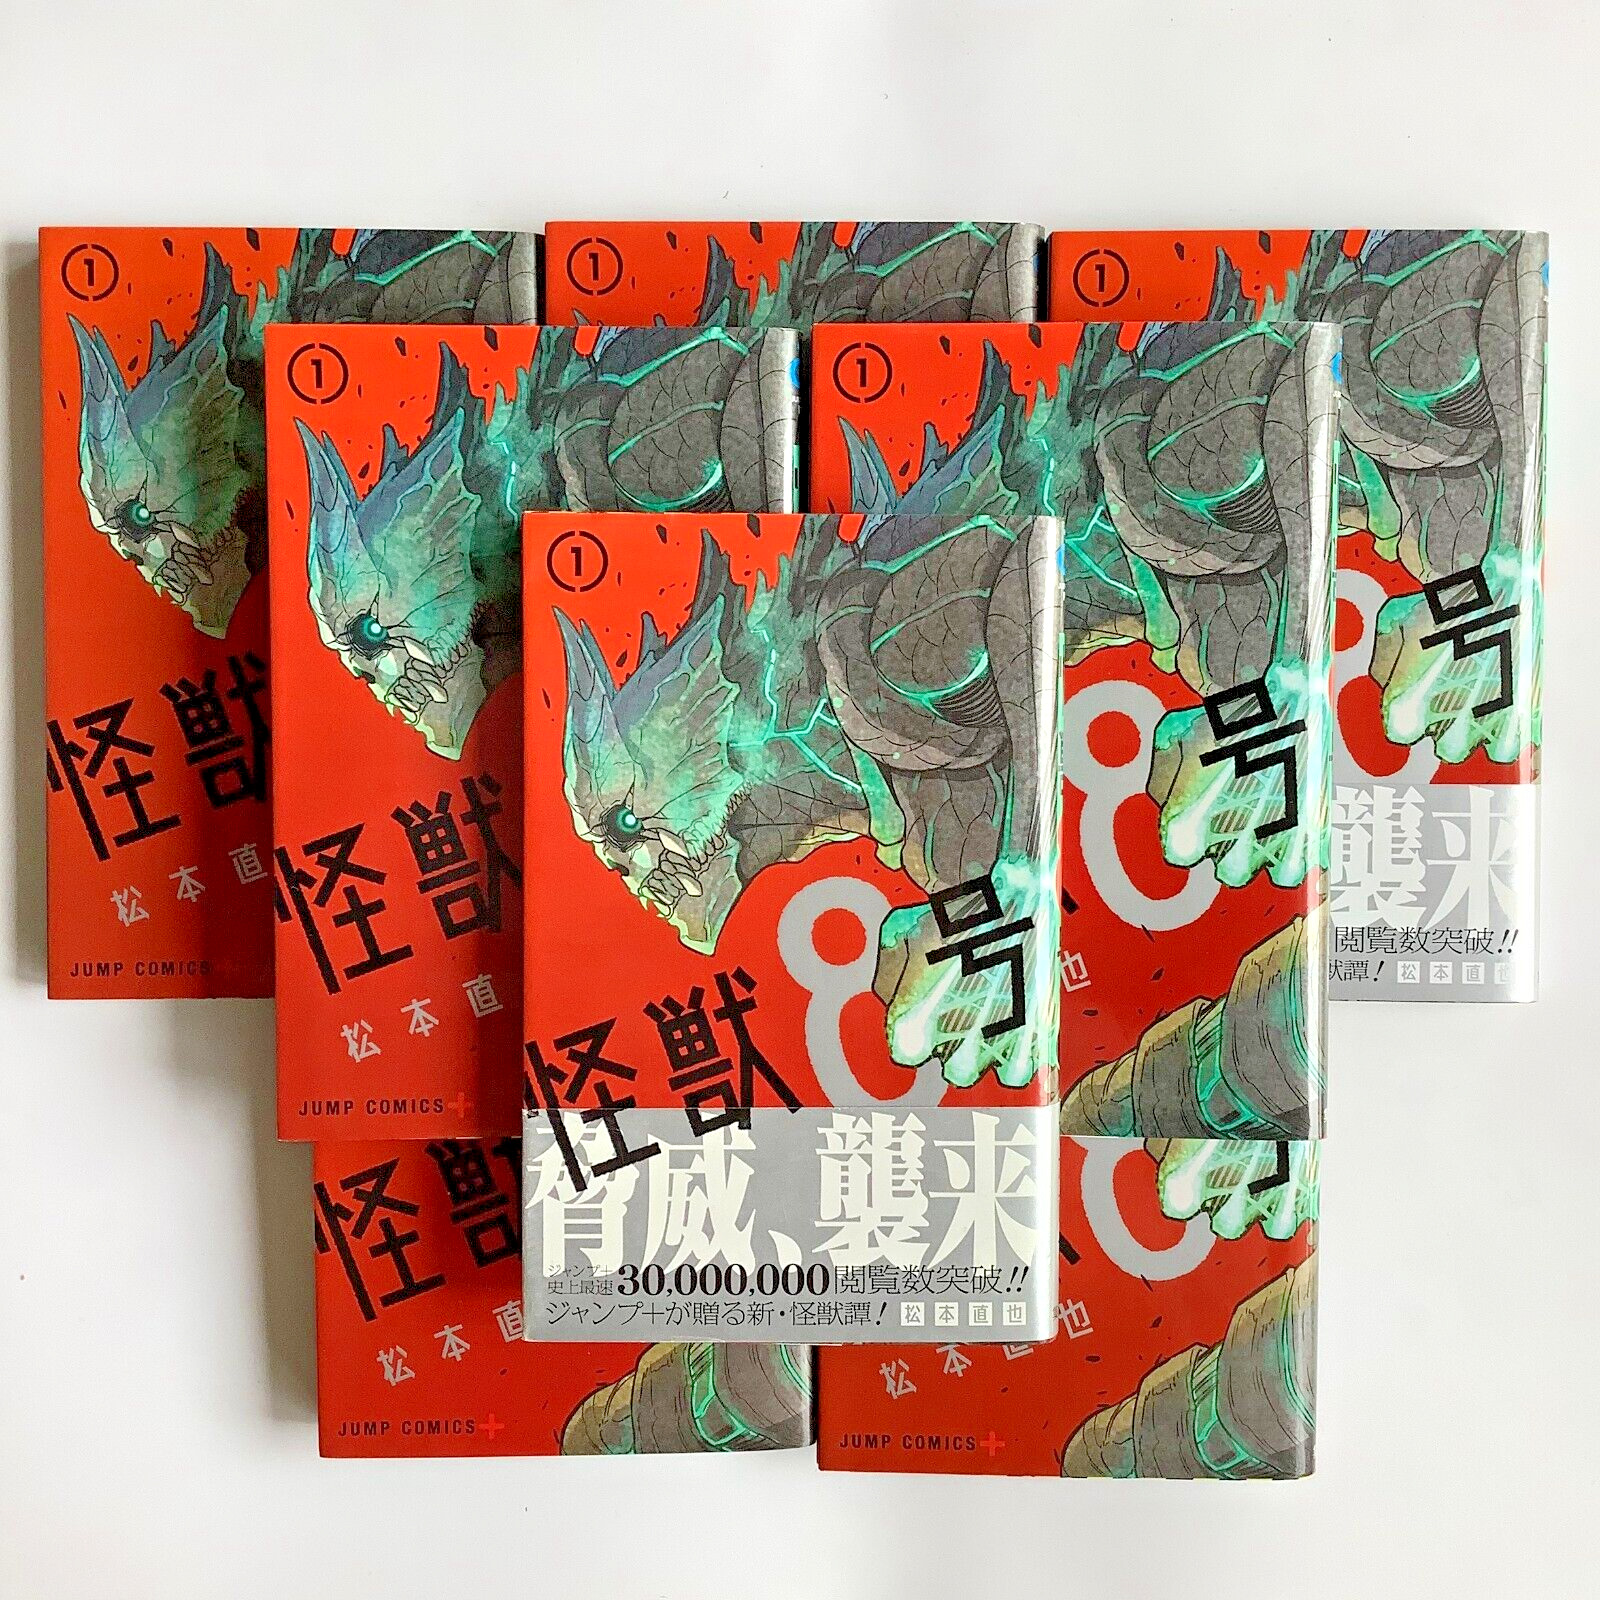 Rare 1st Print Edition Kaiju No. 8 Vol.1 Lot of 8 Manga Comics Japanese language